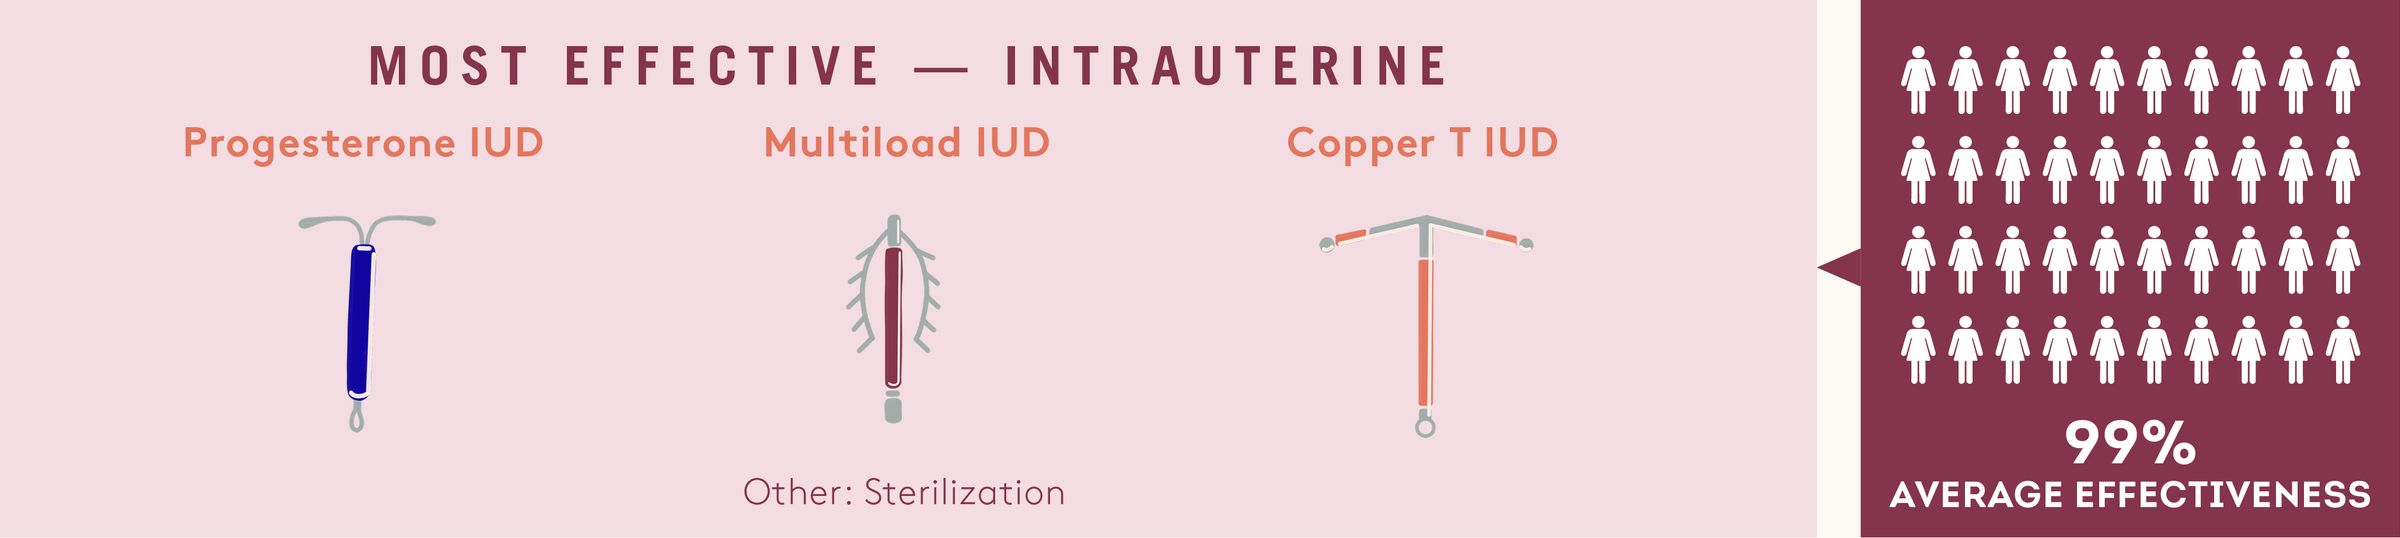 intrauterine methods of birth control